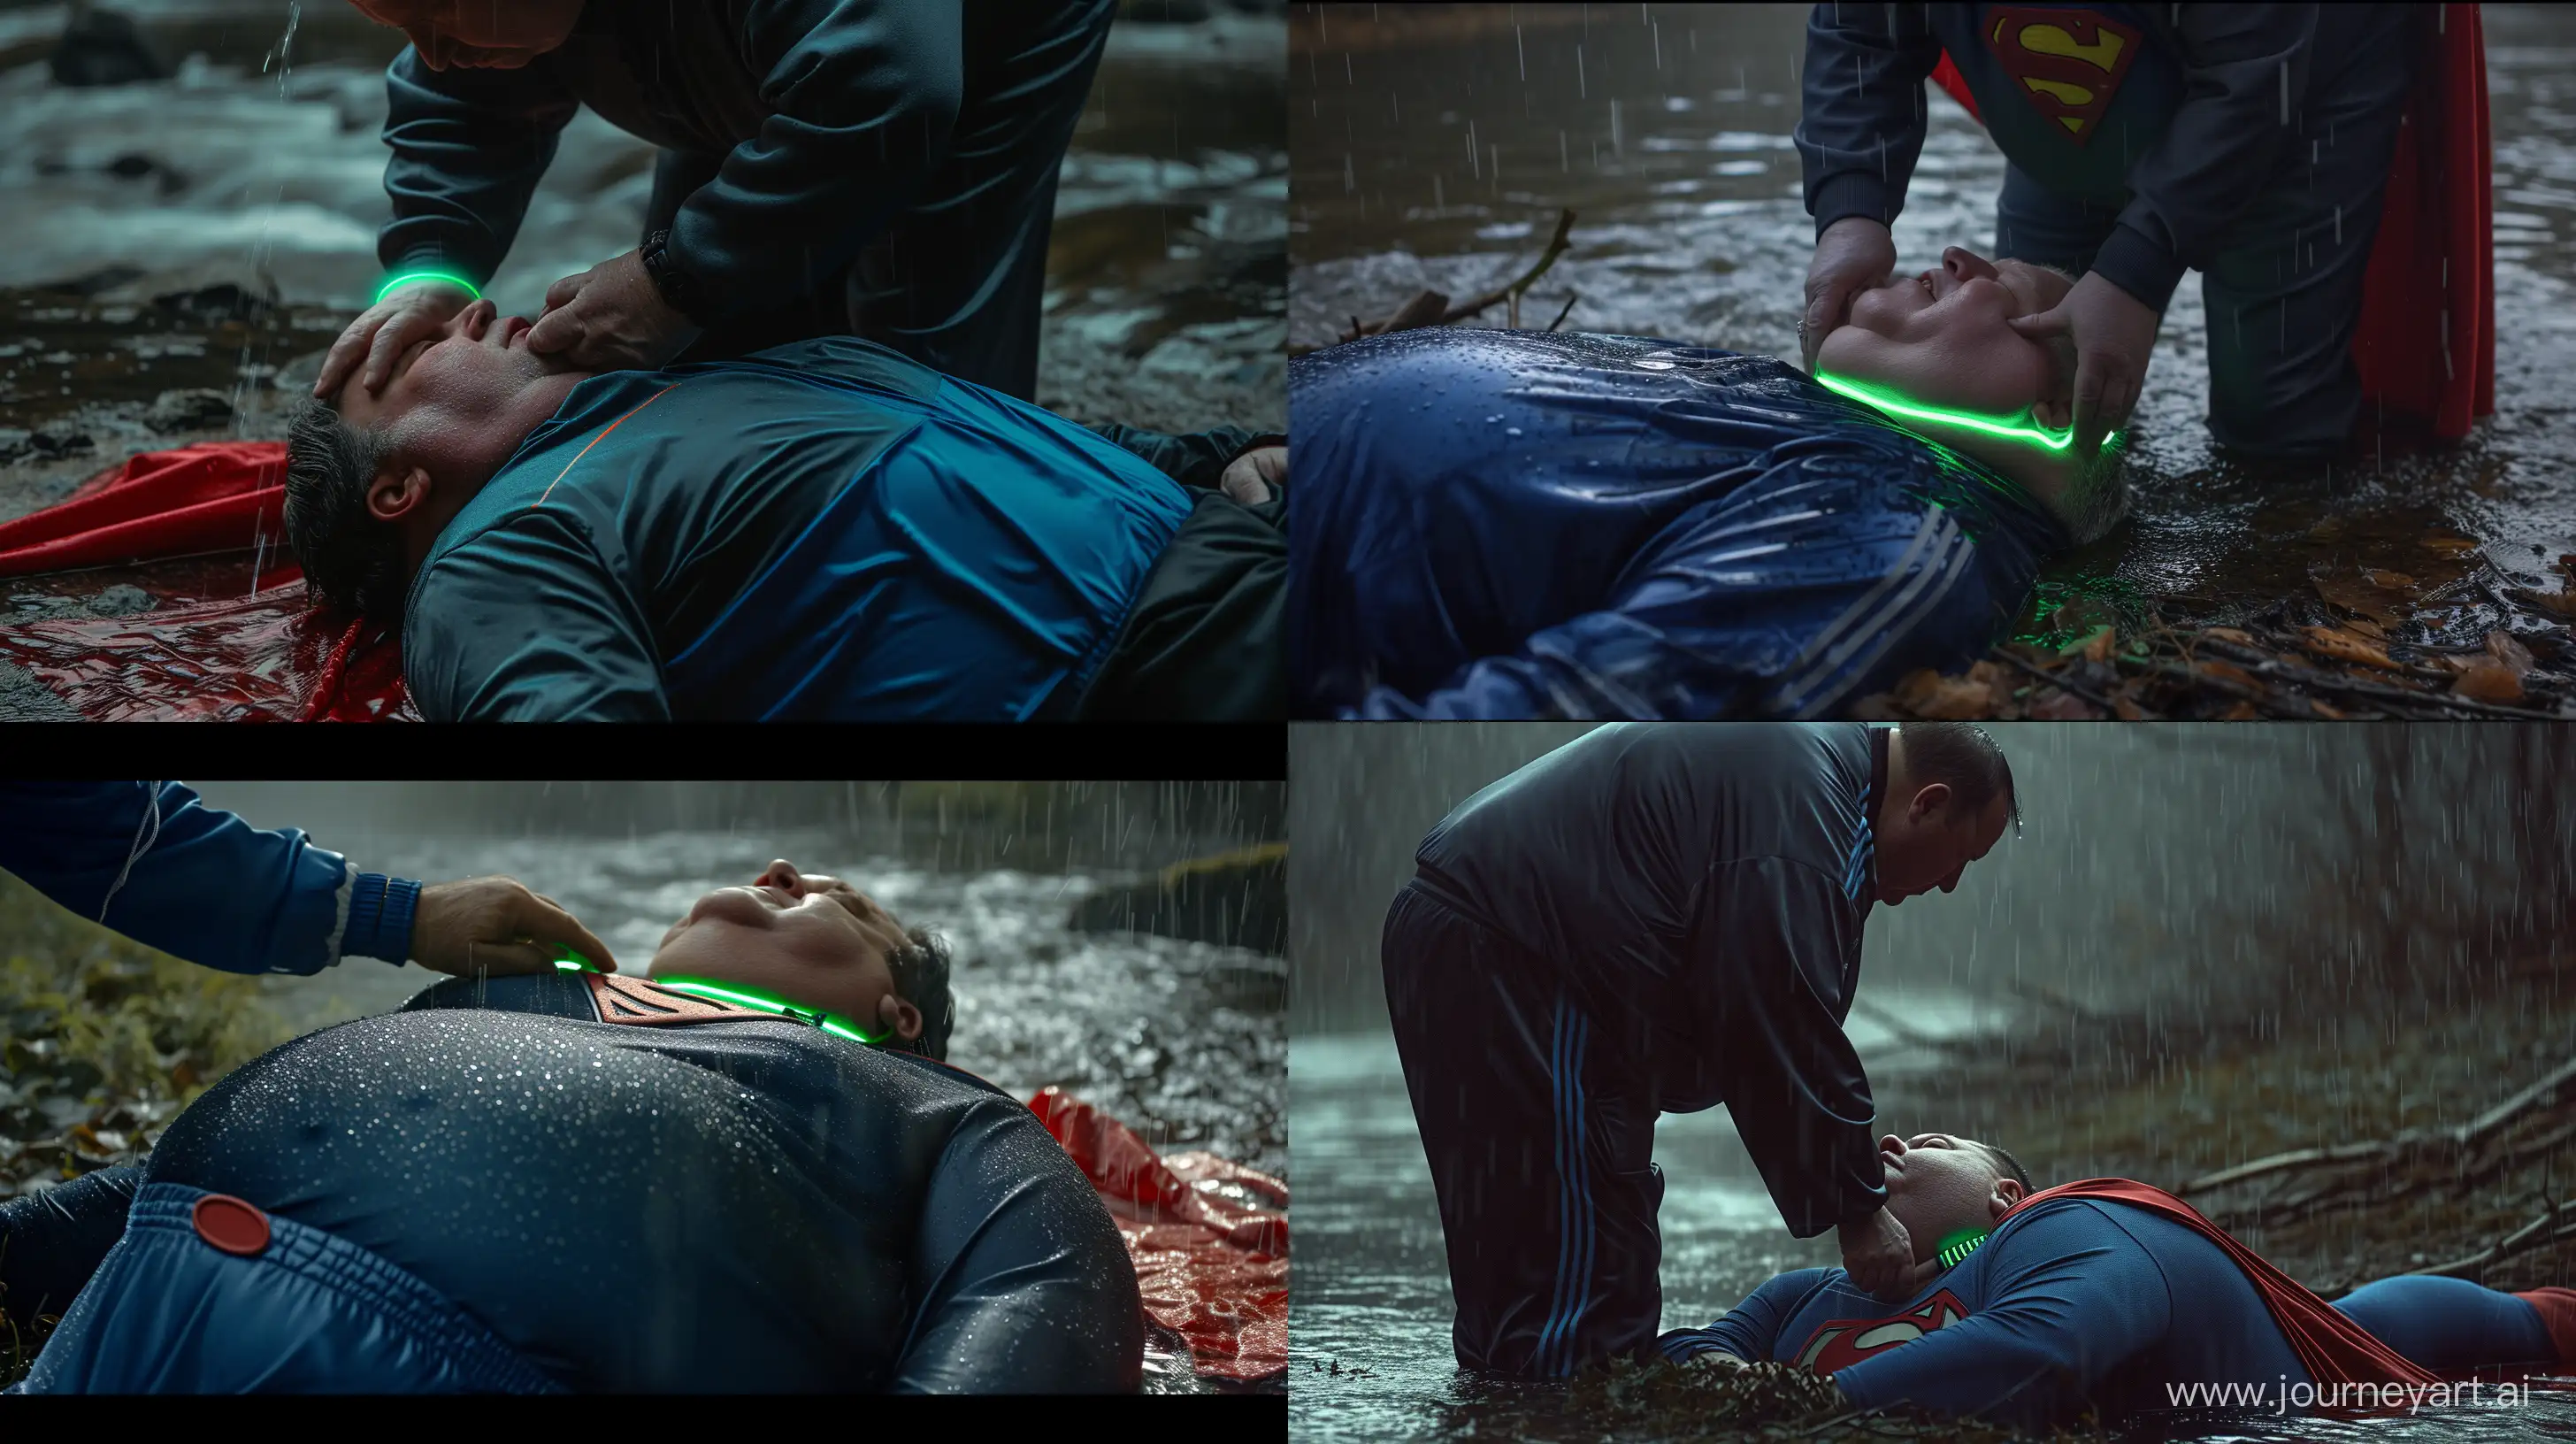 Eccentric-Scene-Elderly-Superhero-Adjusts-Neon-Dog-Collar-in-Rain-by-the-River